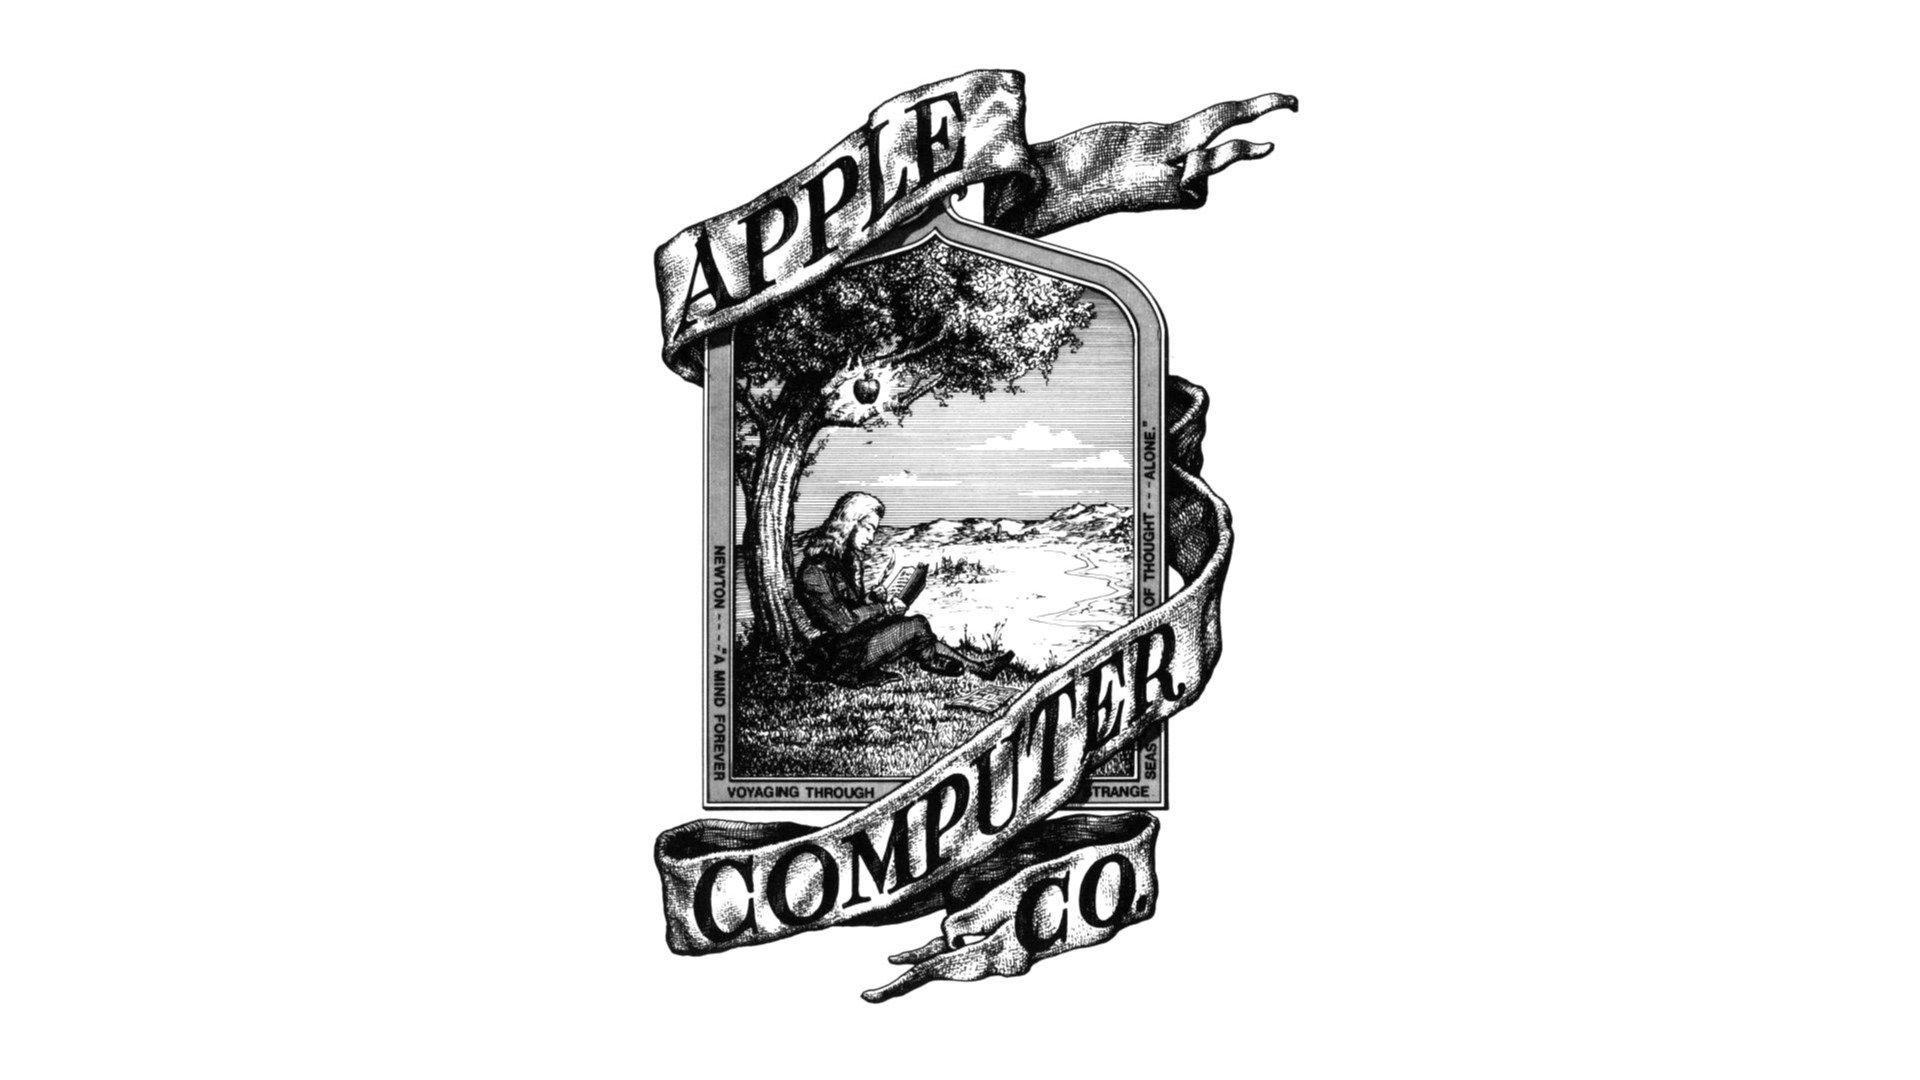 Original Apple Computer Logo - Original Apple logo for the Apple Computer Co. - Oasis Gizmo